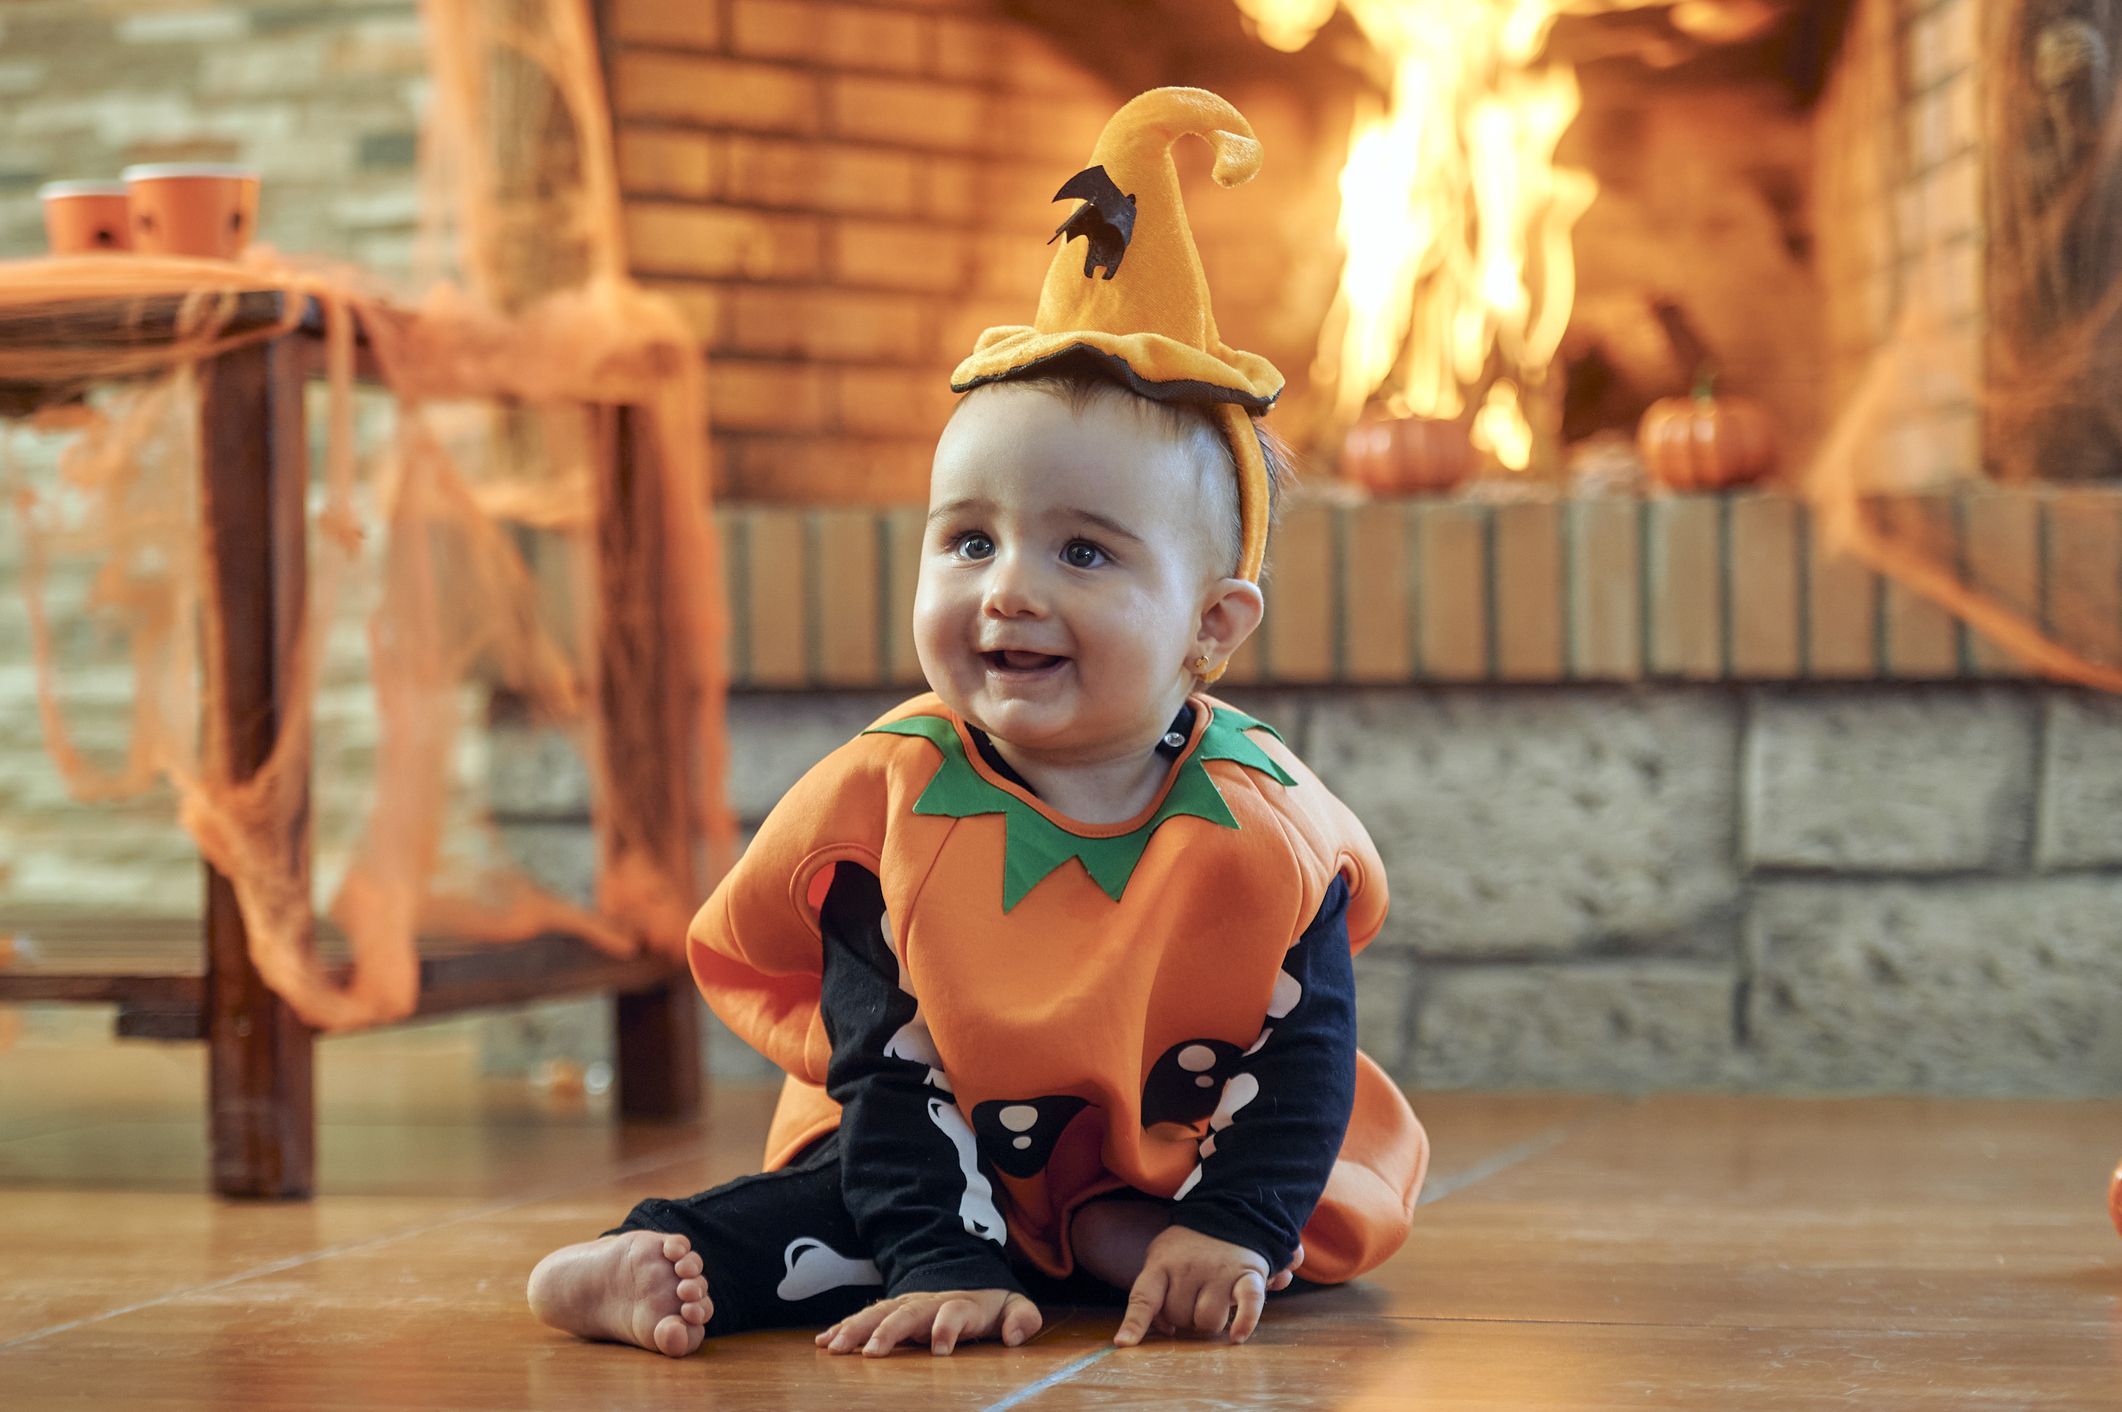 Democracia Australia atractivo Disfraces de bebés e ideas para celebrar Halloween